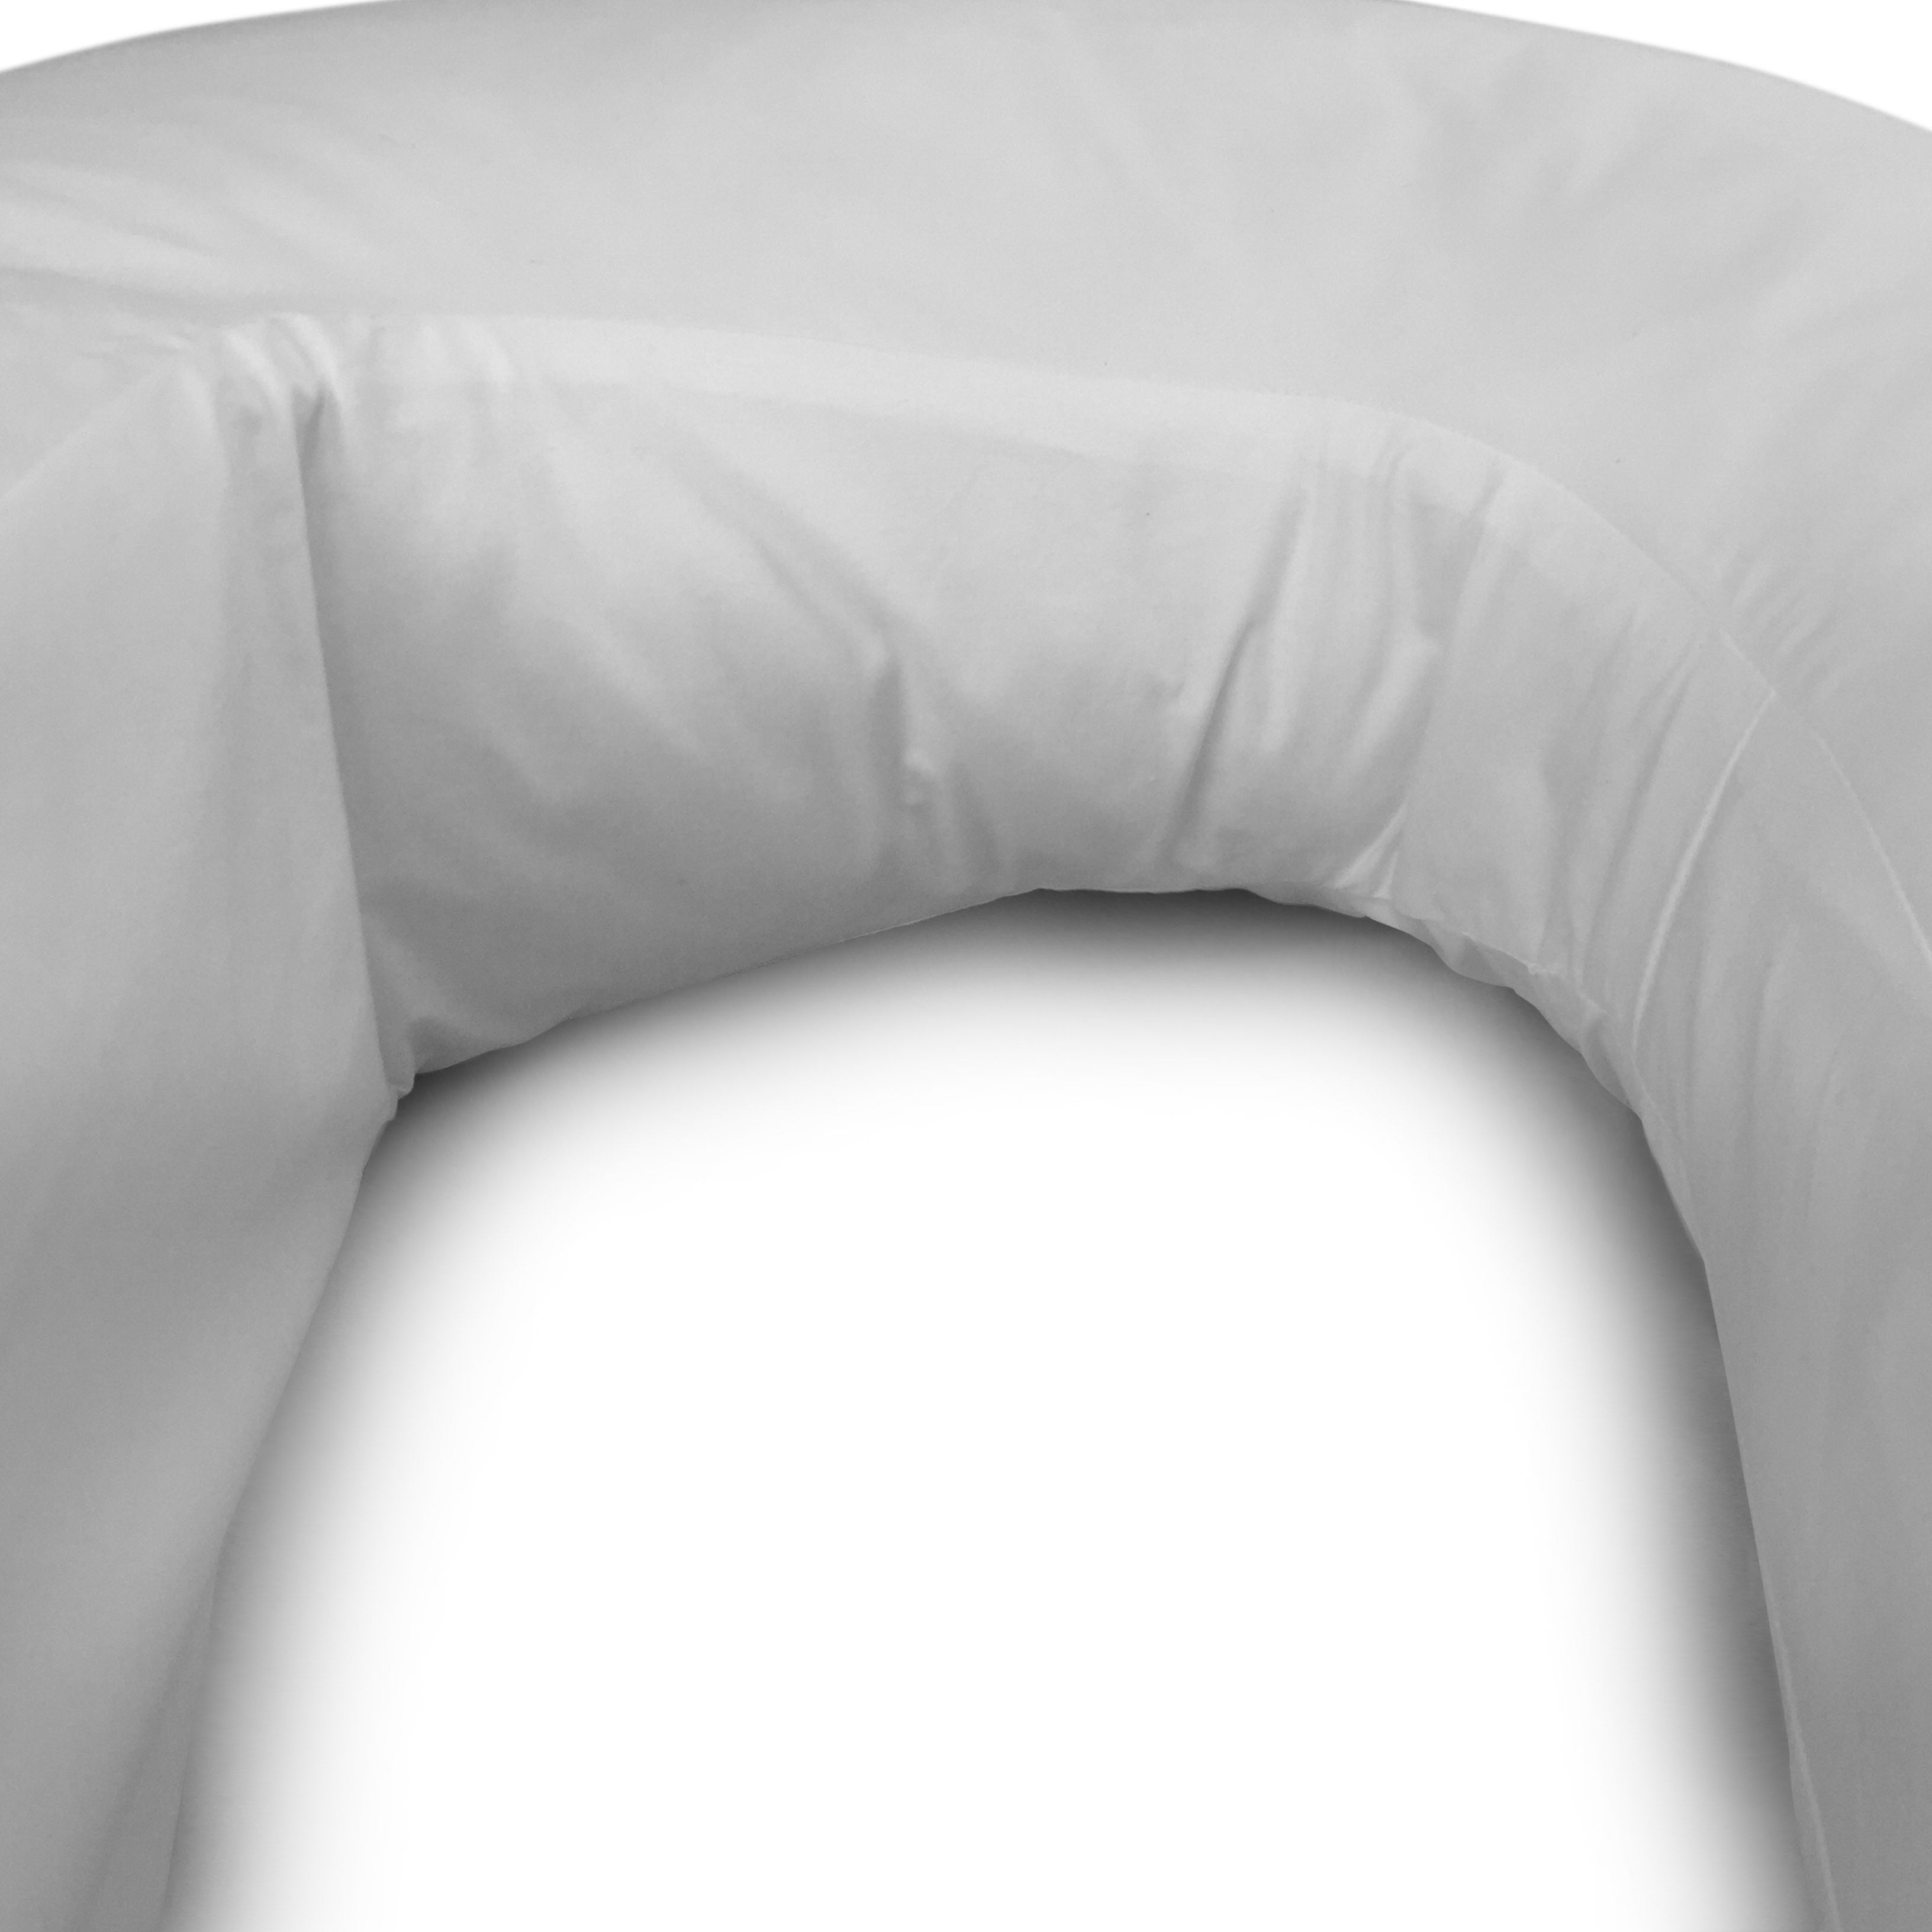 Sleep Apnea Comfort Pillow with Pillowcase Plus Free Shipping